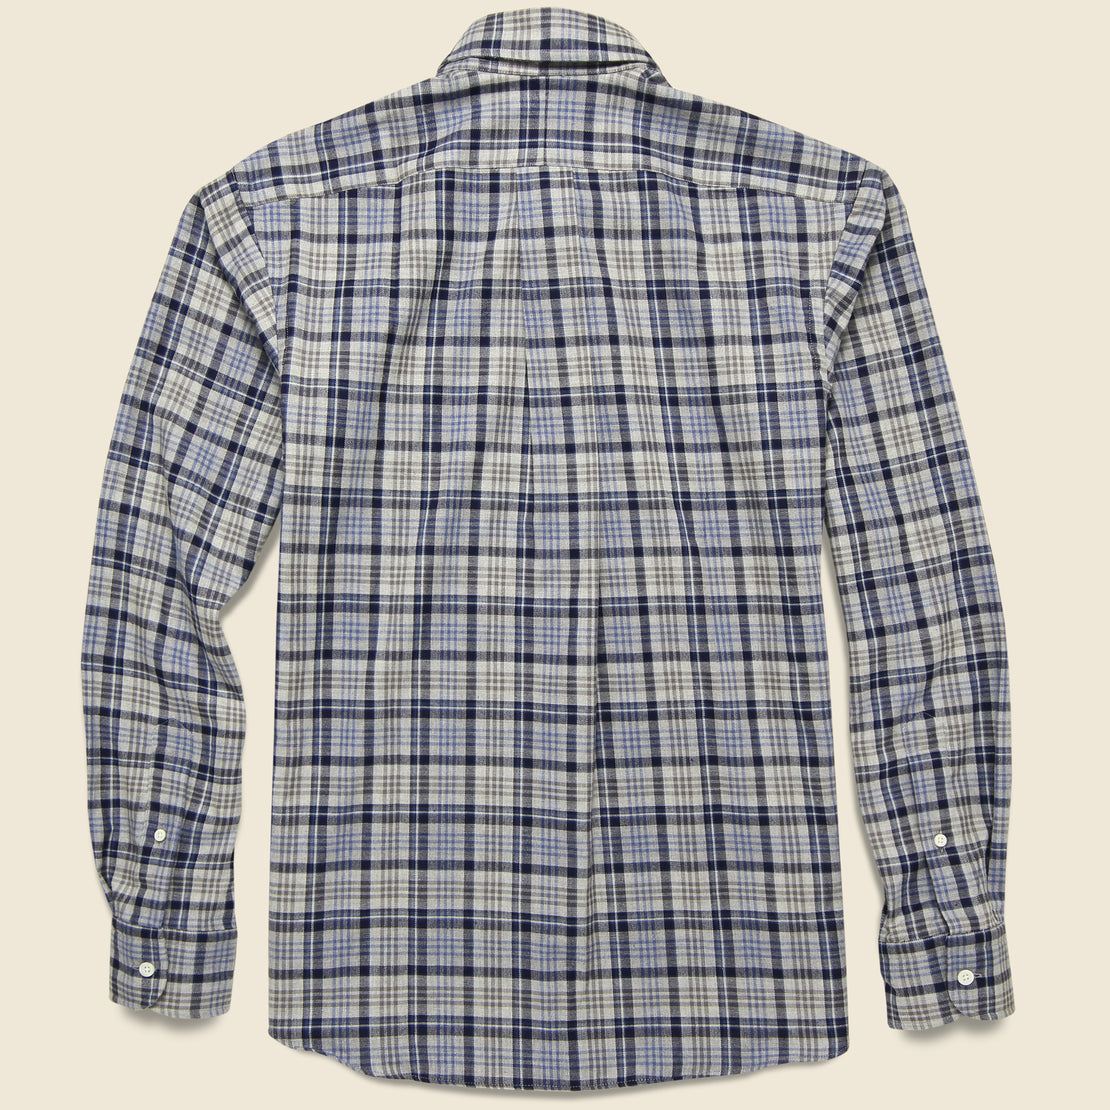 Plaid Flannel - Navy/Grey - Hamilton Shirt Co. - STAG Provisions - Tops - L/S Woven - Plaid